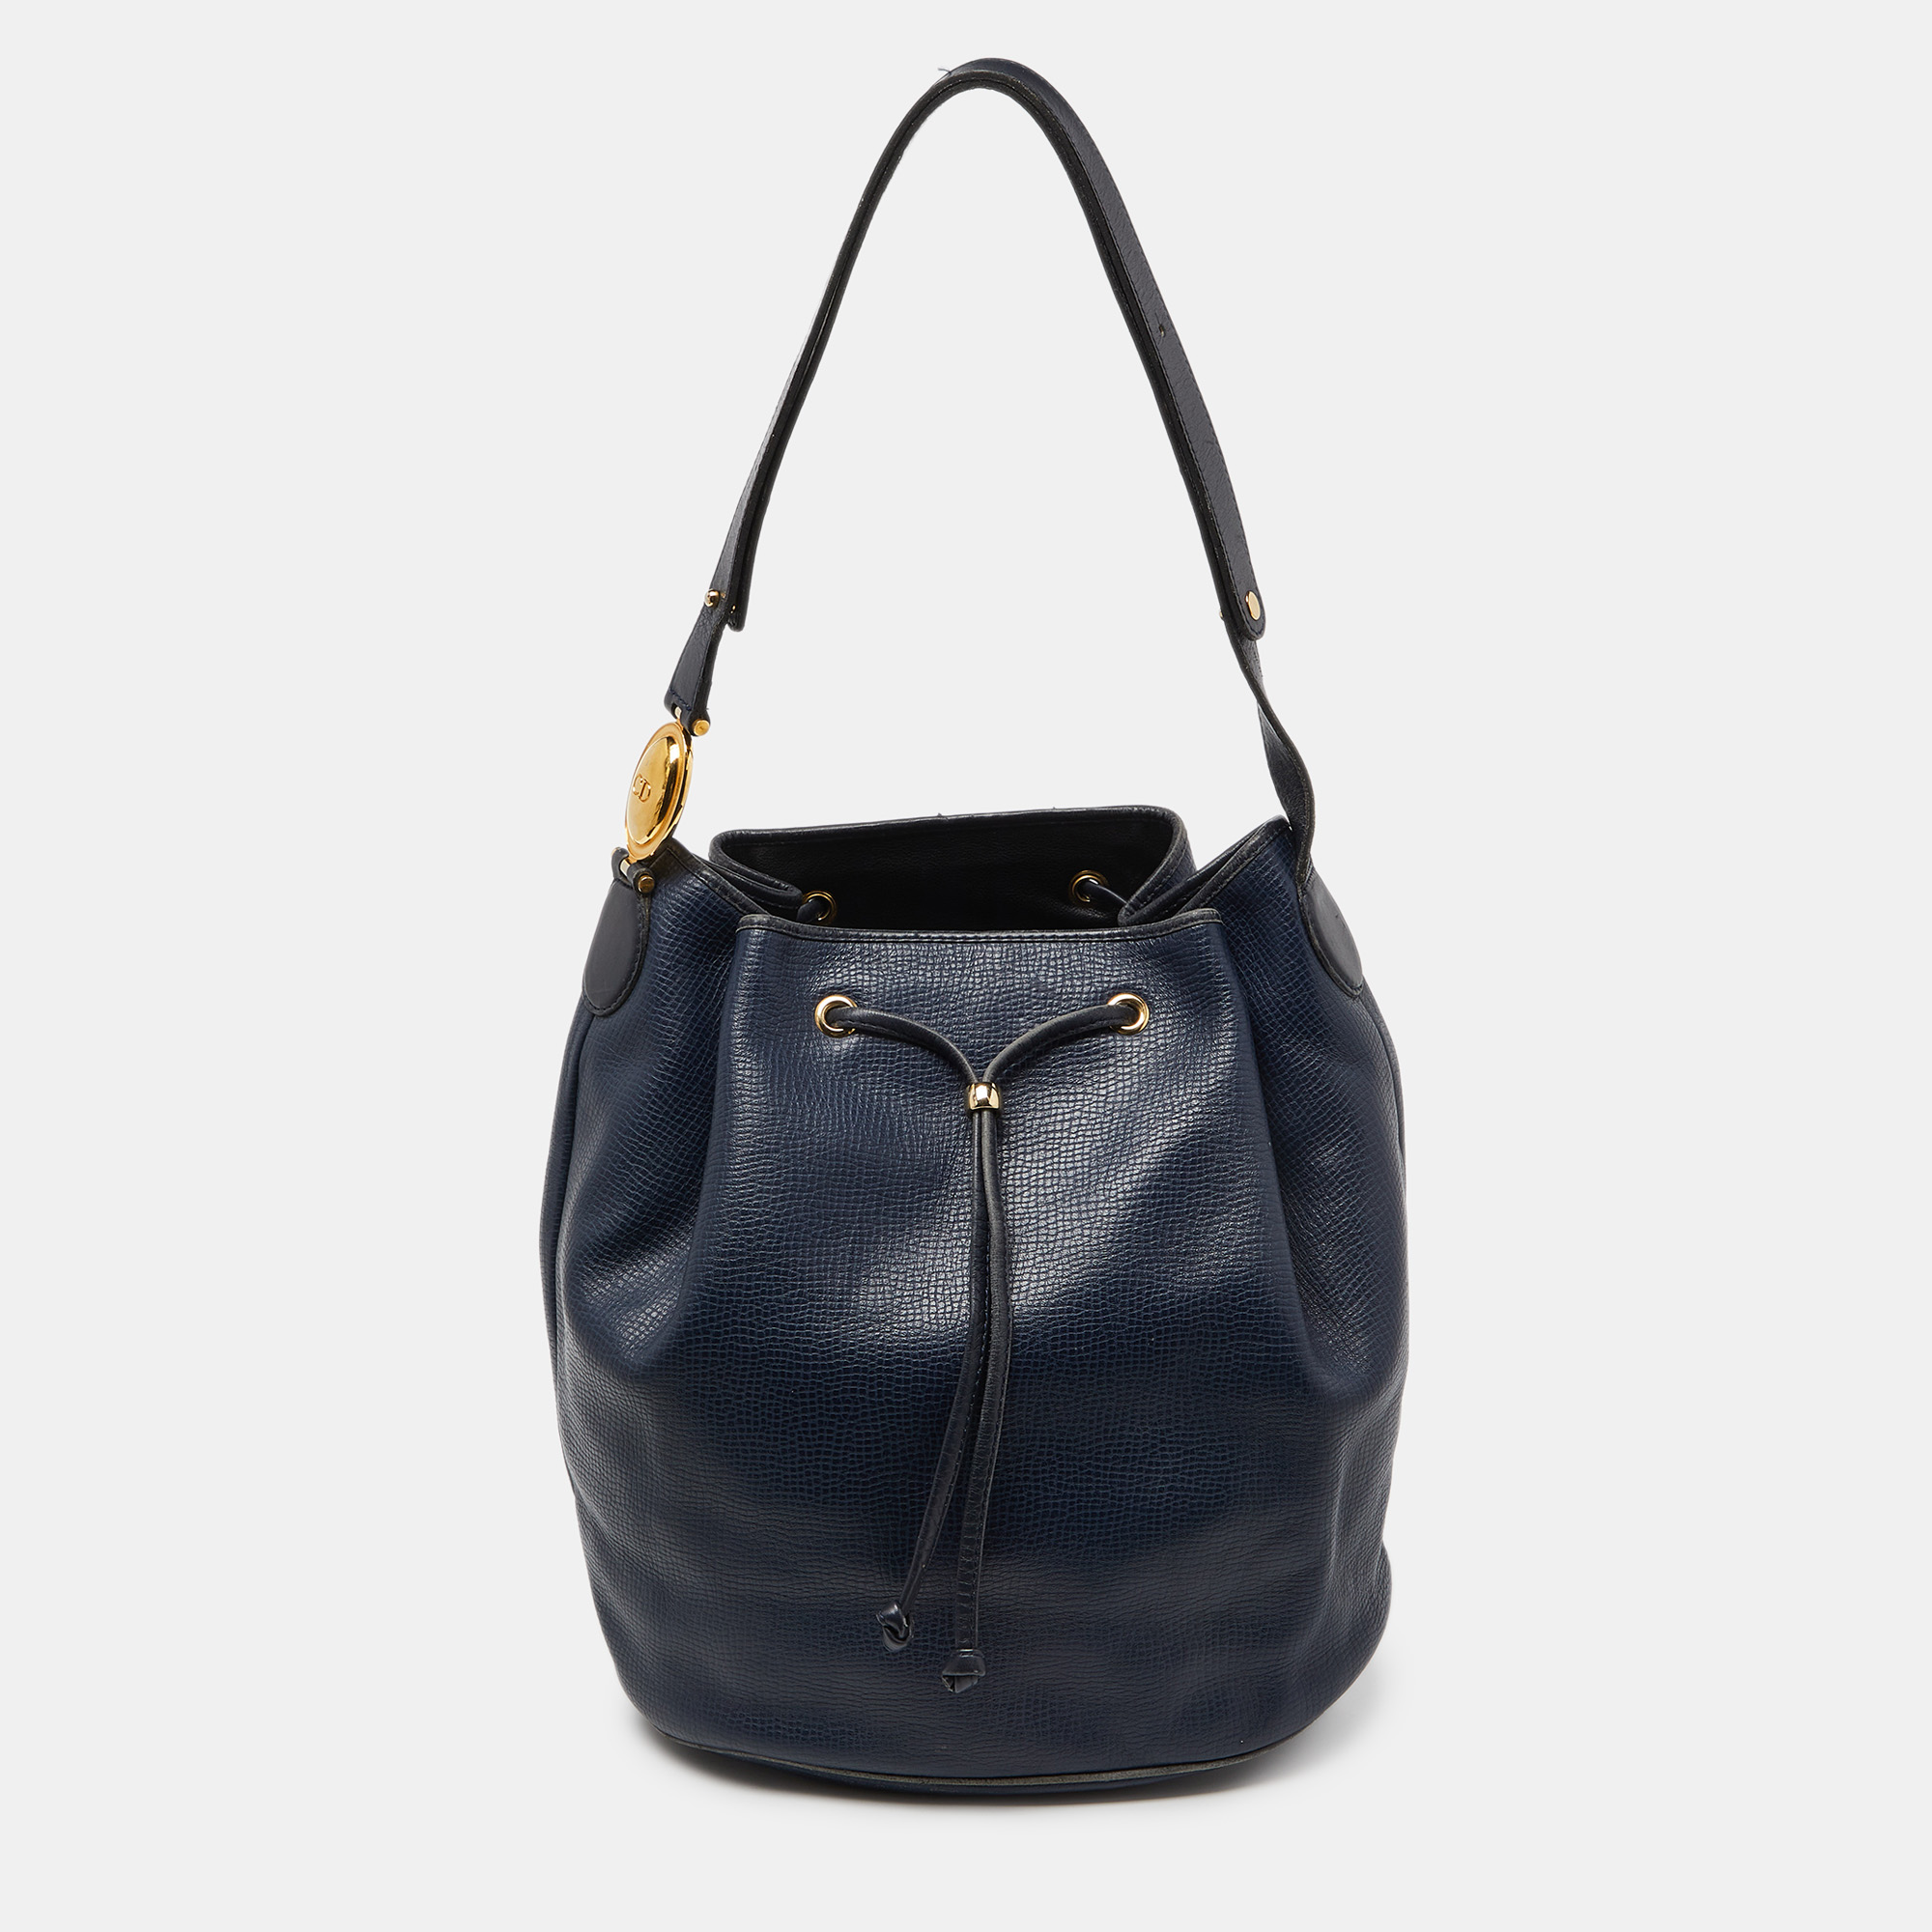 Dior blue leather string bucket bag